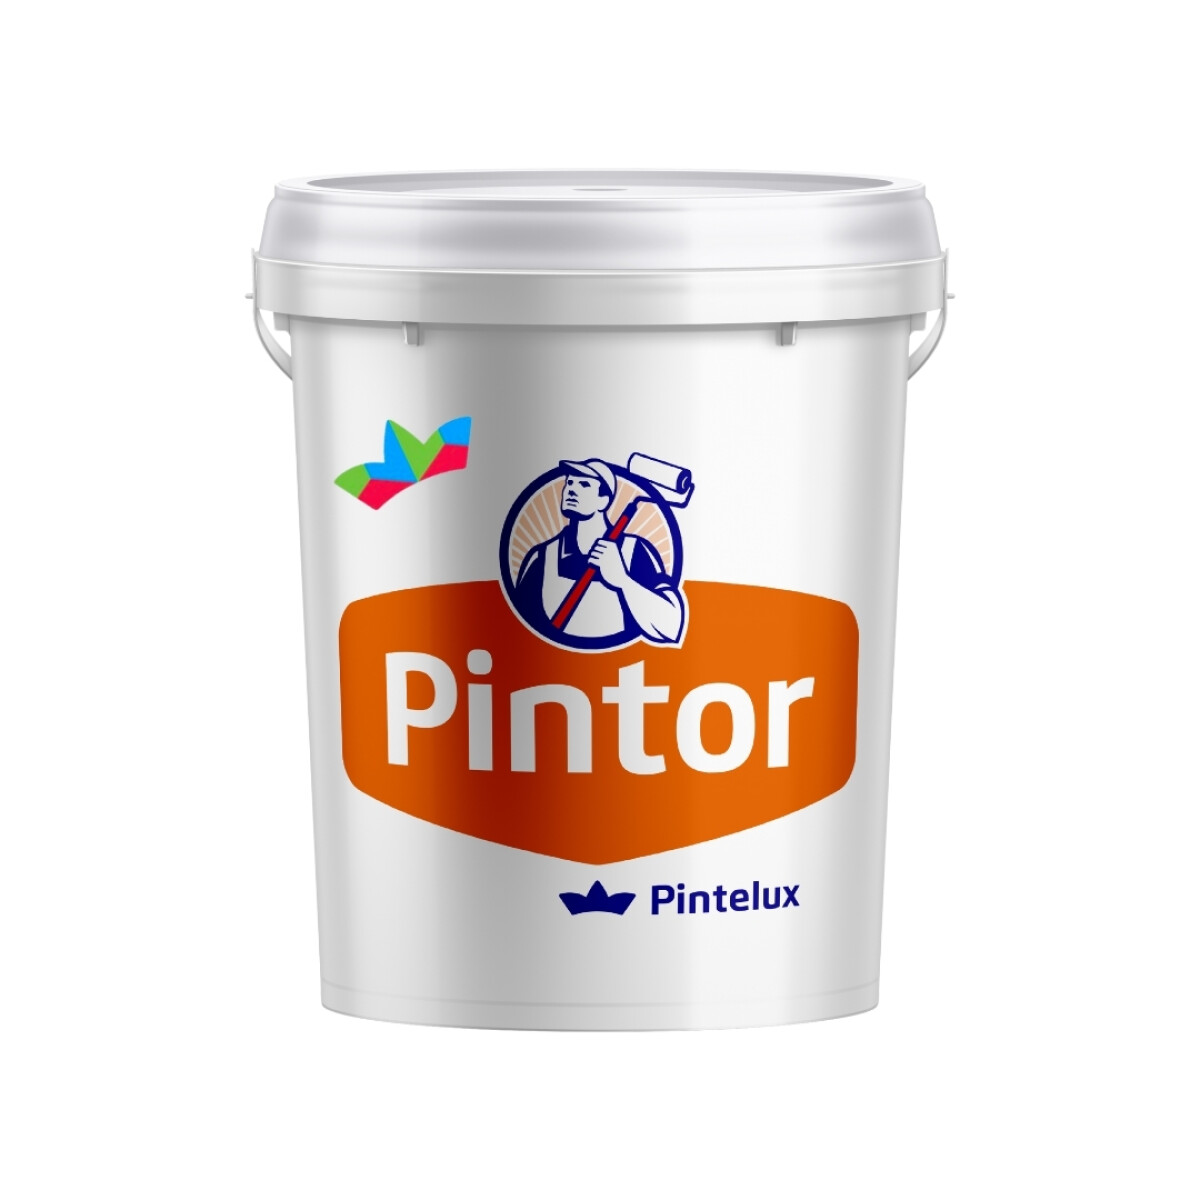 PINTOR LATEX PREMIUM DURAZNO PERFECTO - 3.6LTS 